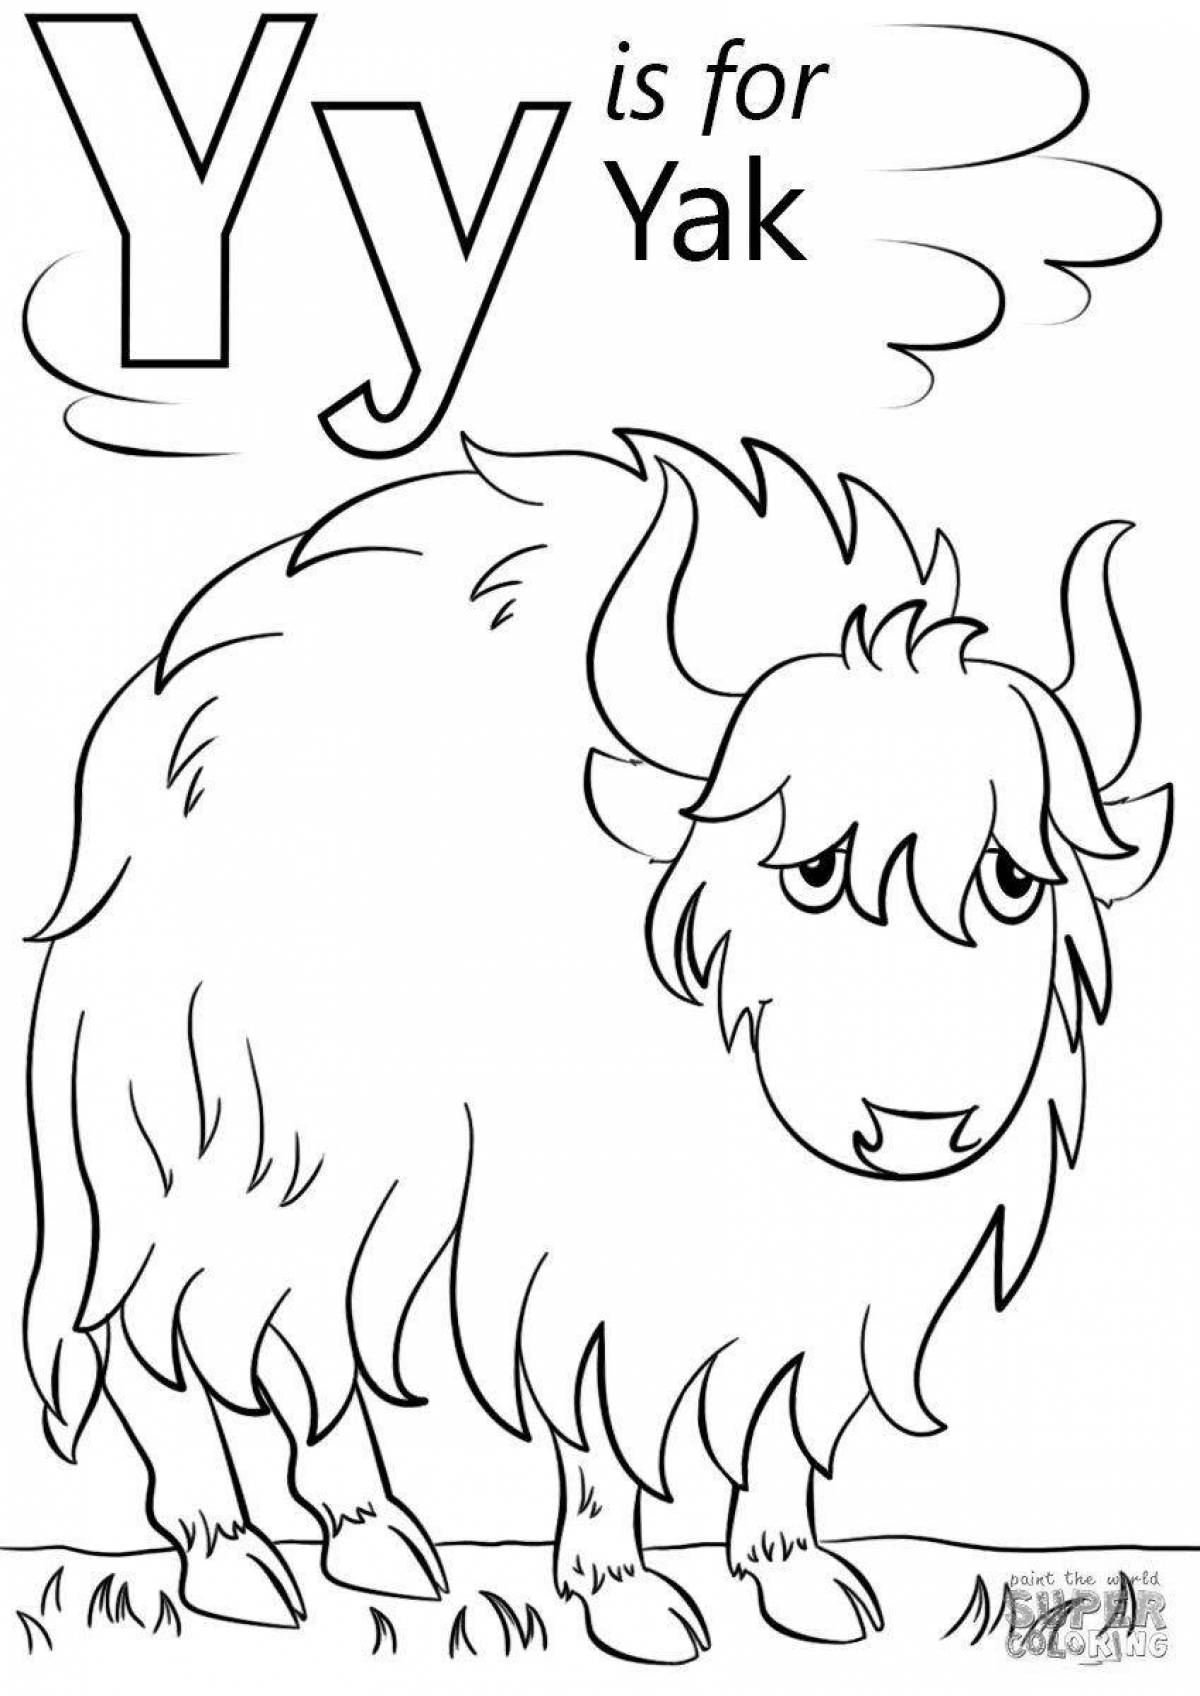 Coloring book cheerful yak